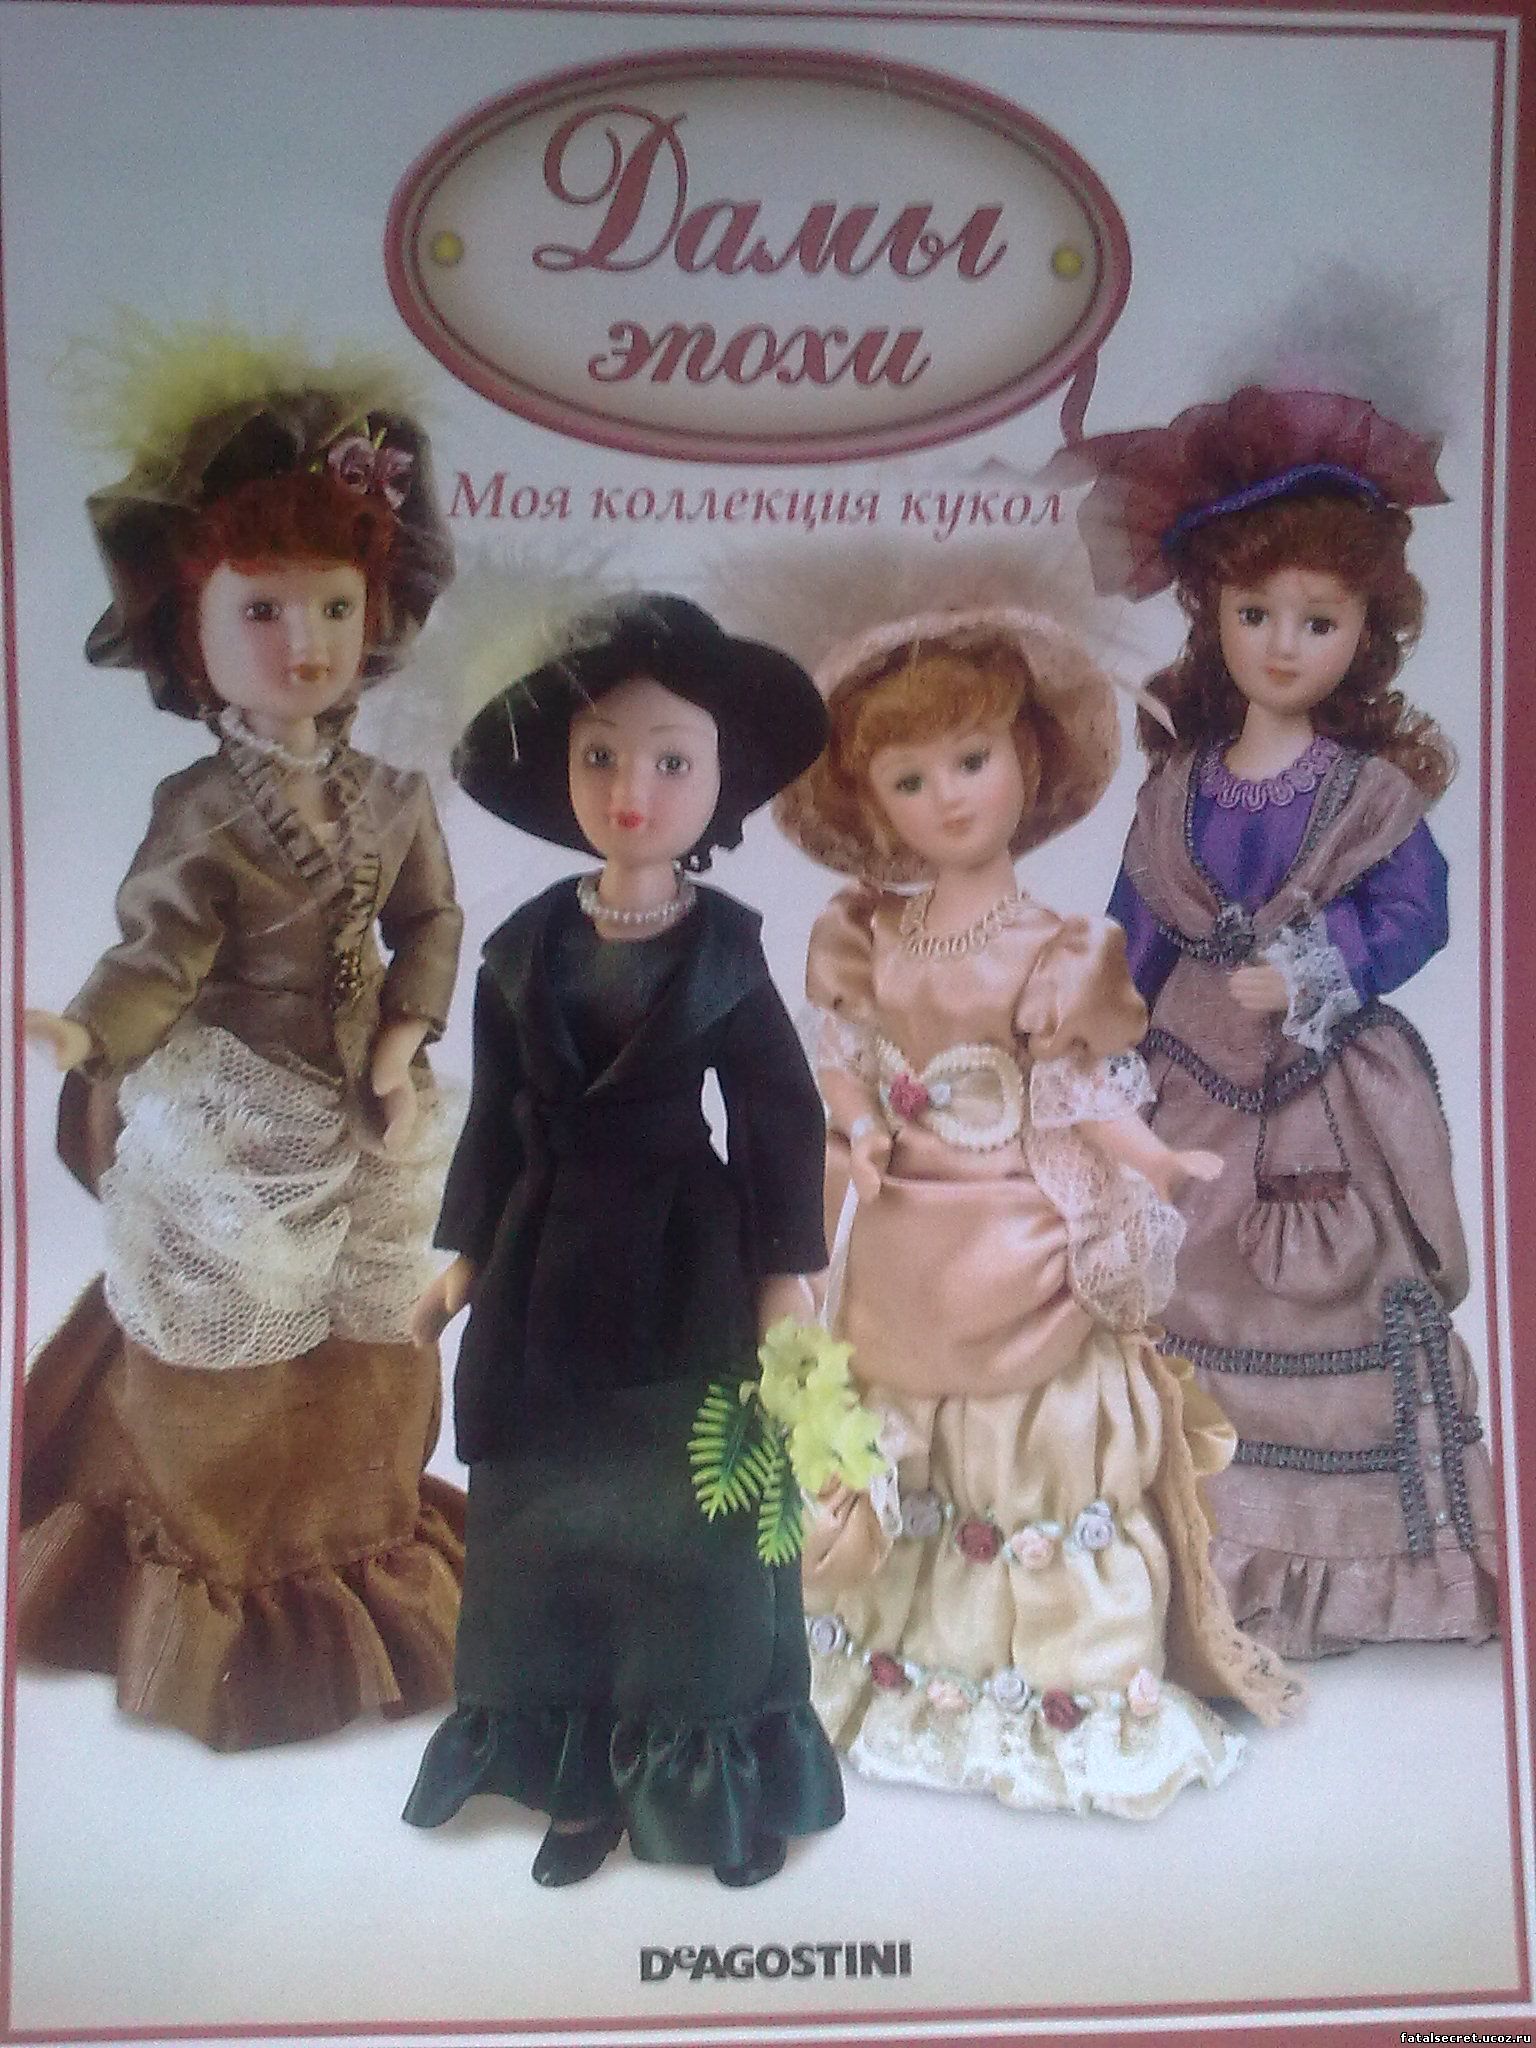 Коллекция кукол дамы эпохи. Куклы дамы эпохи ДЕАГОСТИНИ вся коллекция. Коллекция кукол ДЕАГОСТИНИ Екатерина. Коллекция куклы эпохи героиня Дюма. Дамы эпохи моя коллекция кукол.